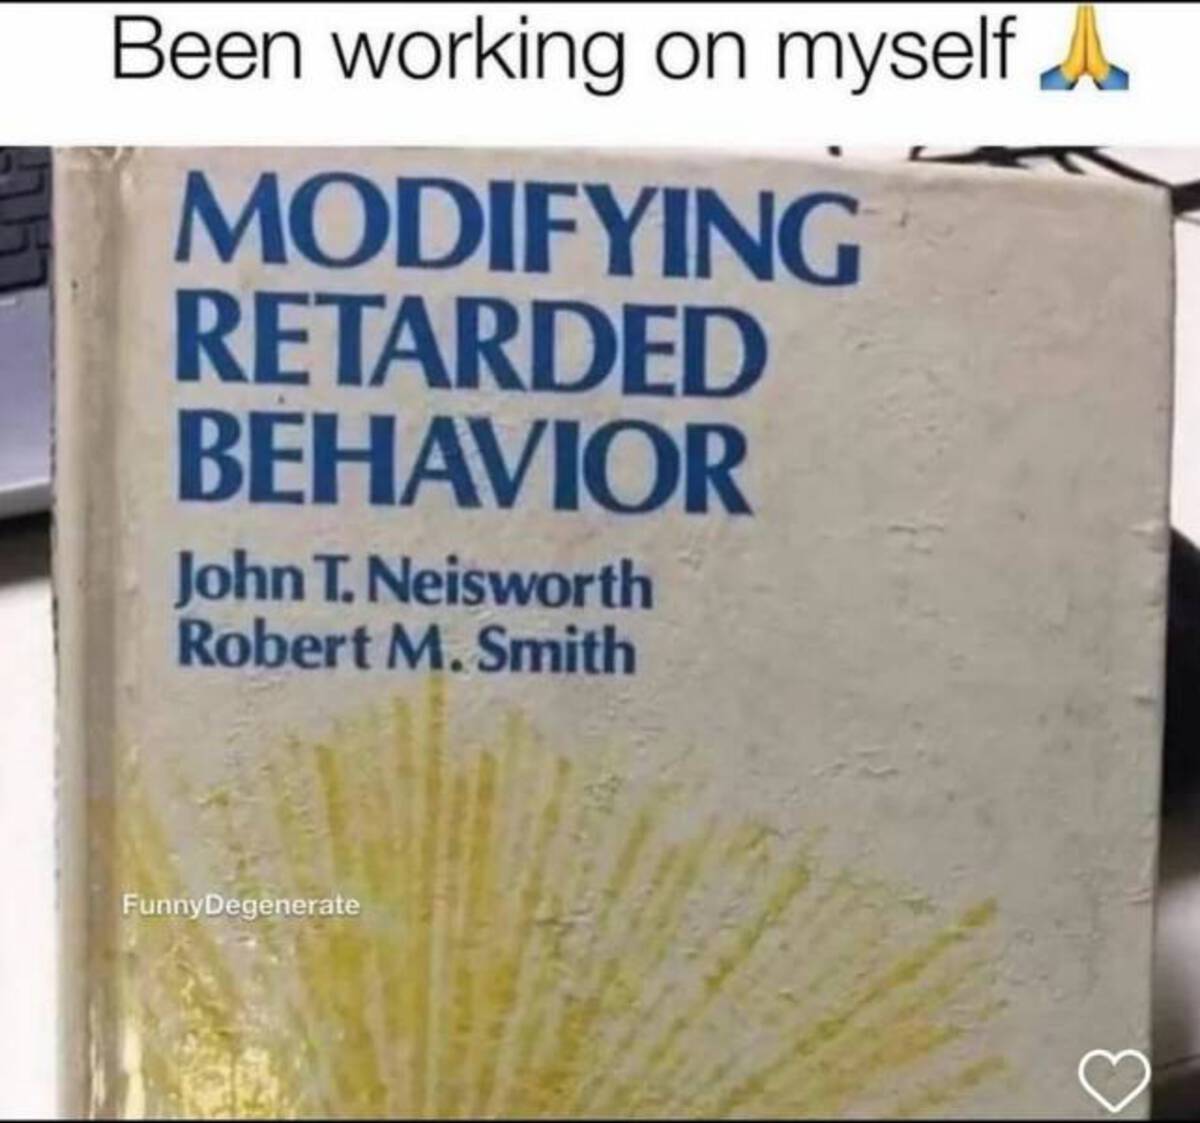 Modifying retarded behavior - Been working on myself Modifying Retarded Behavior John T. Neisworth Robert M. Smith FunnyDegenerate